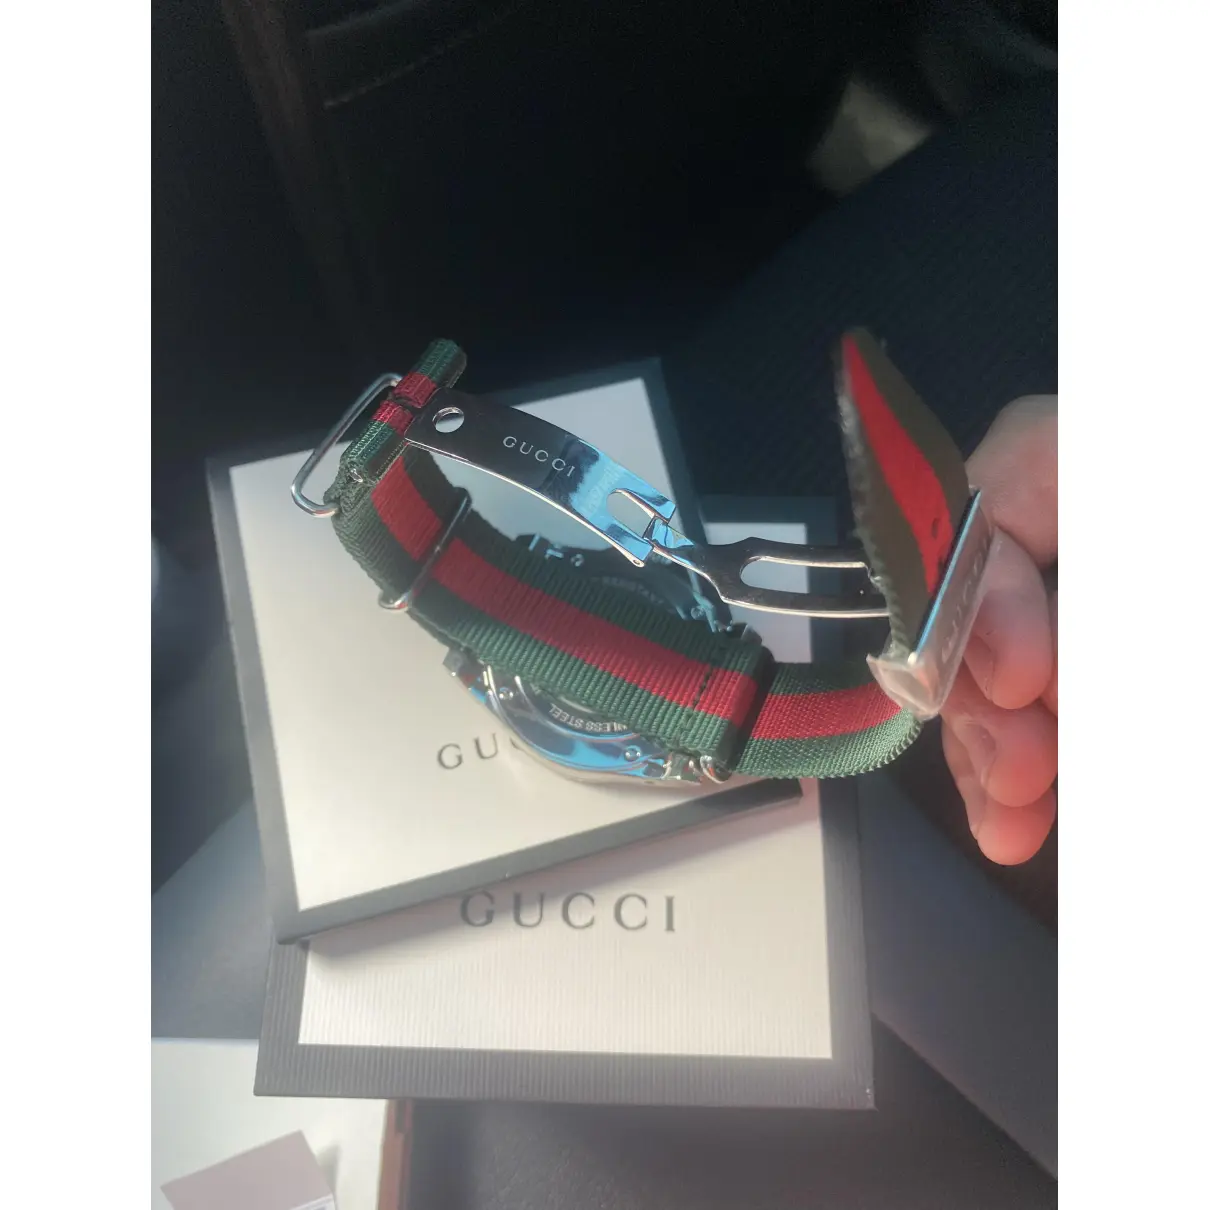 Buy Gucci Dive watch online